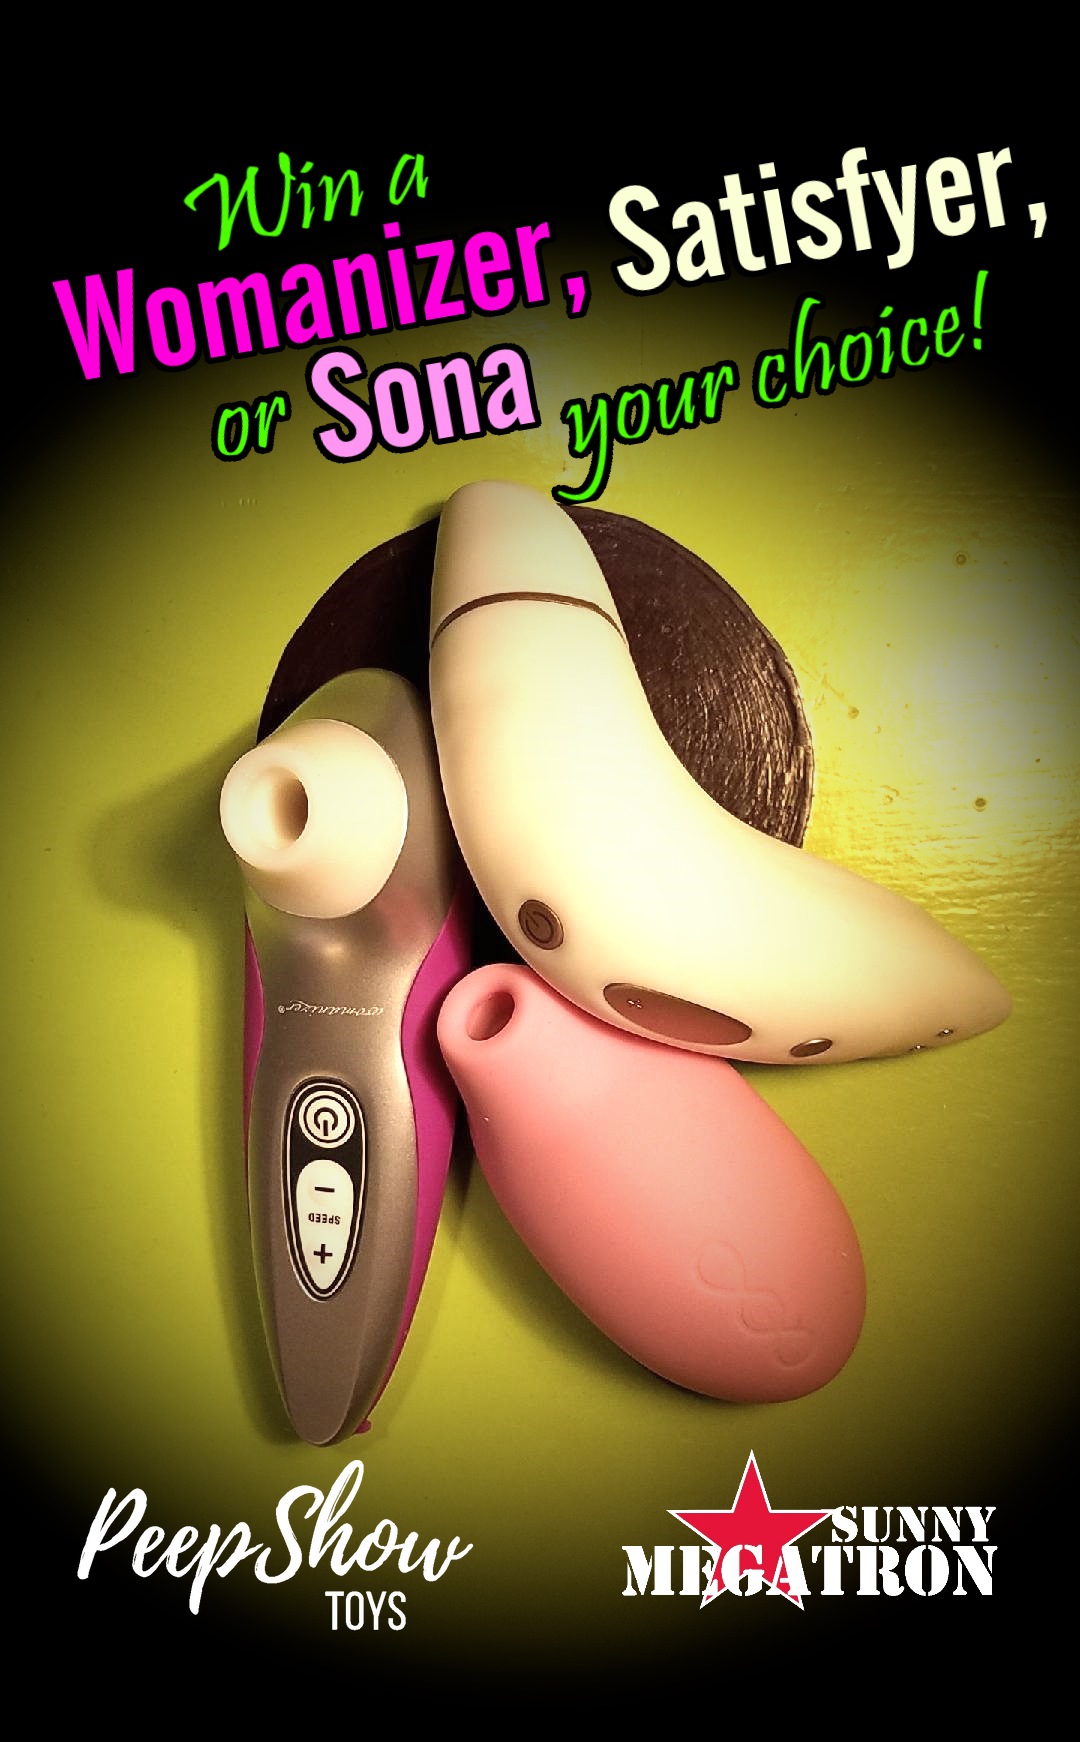 Womanizer Sona Satisfyer giveaway